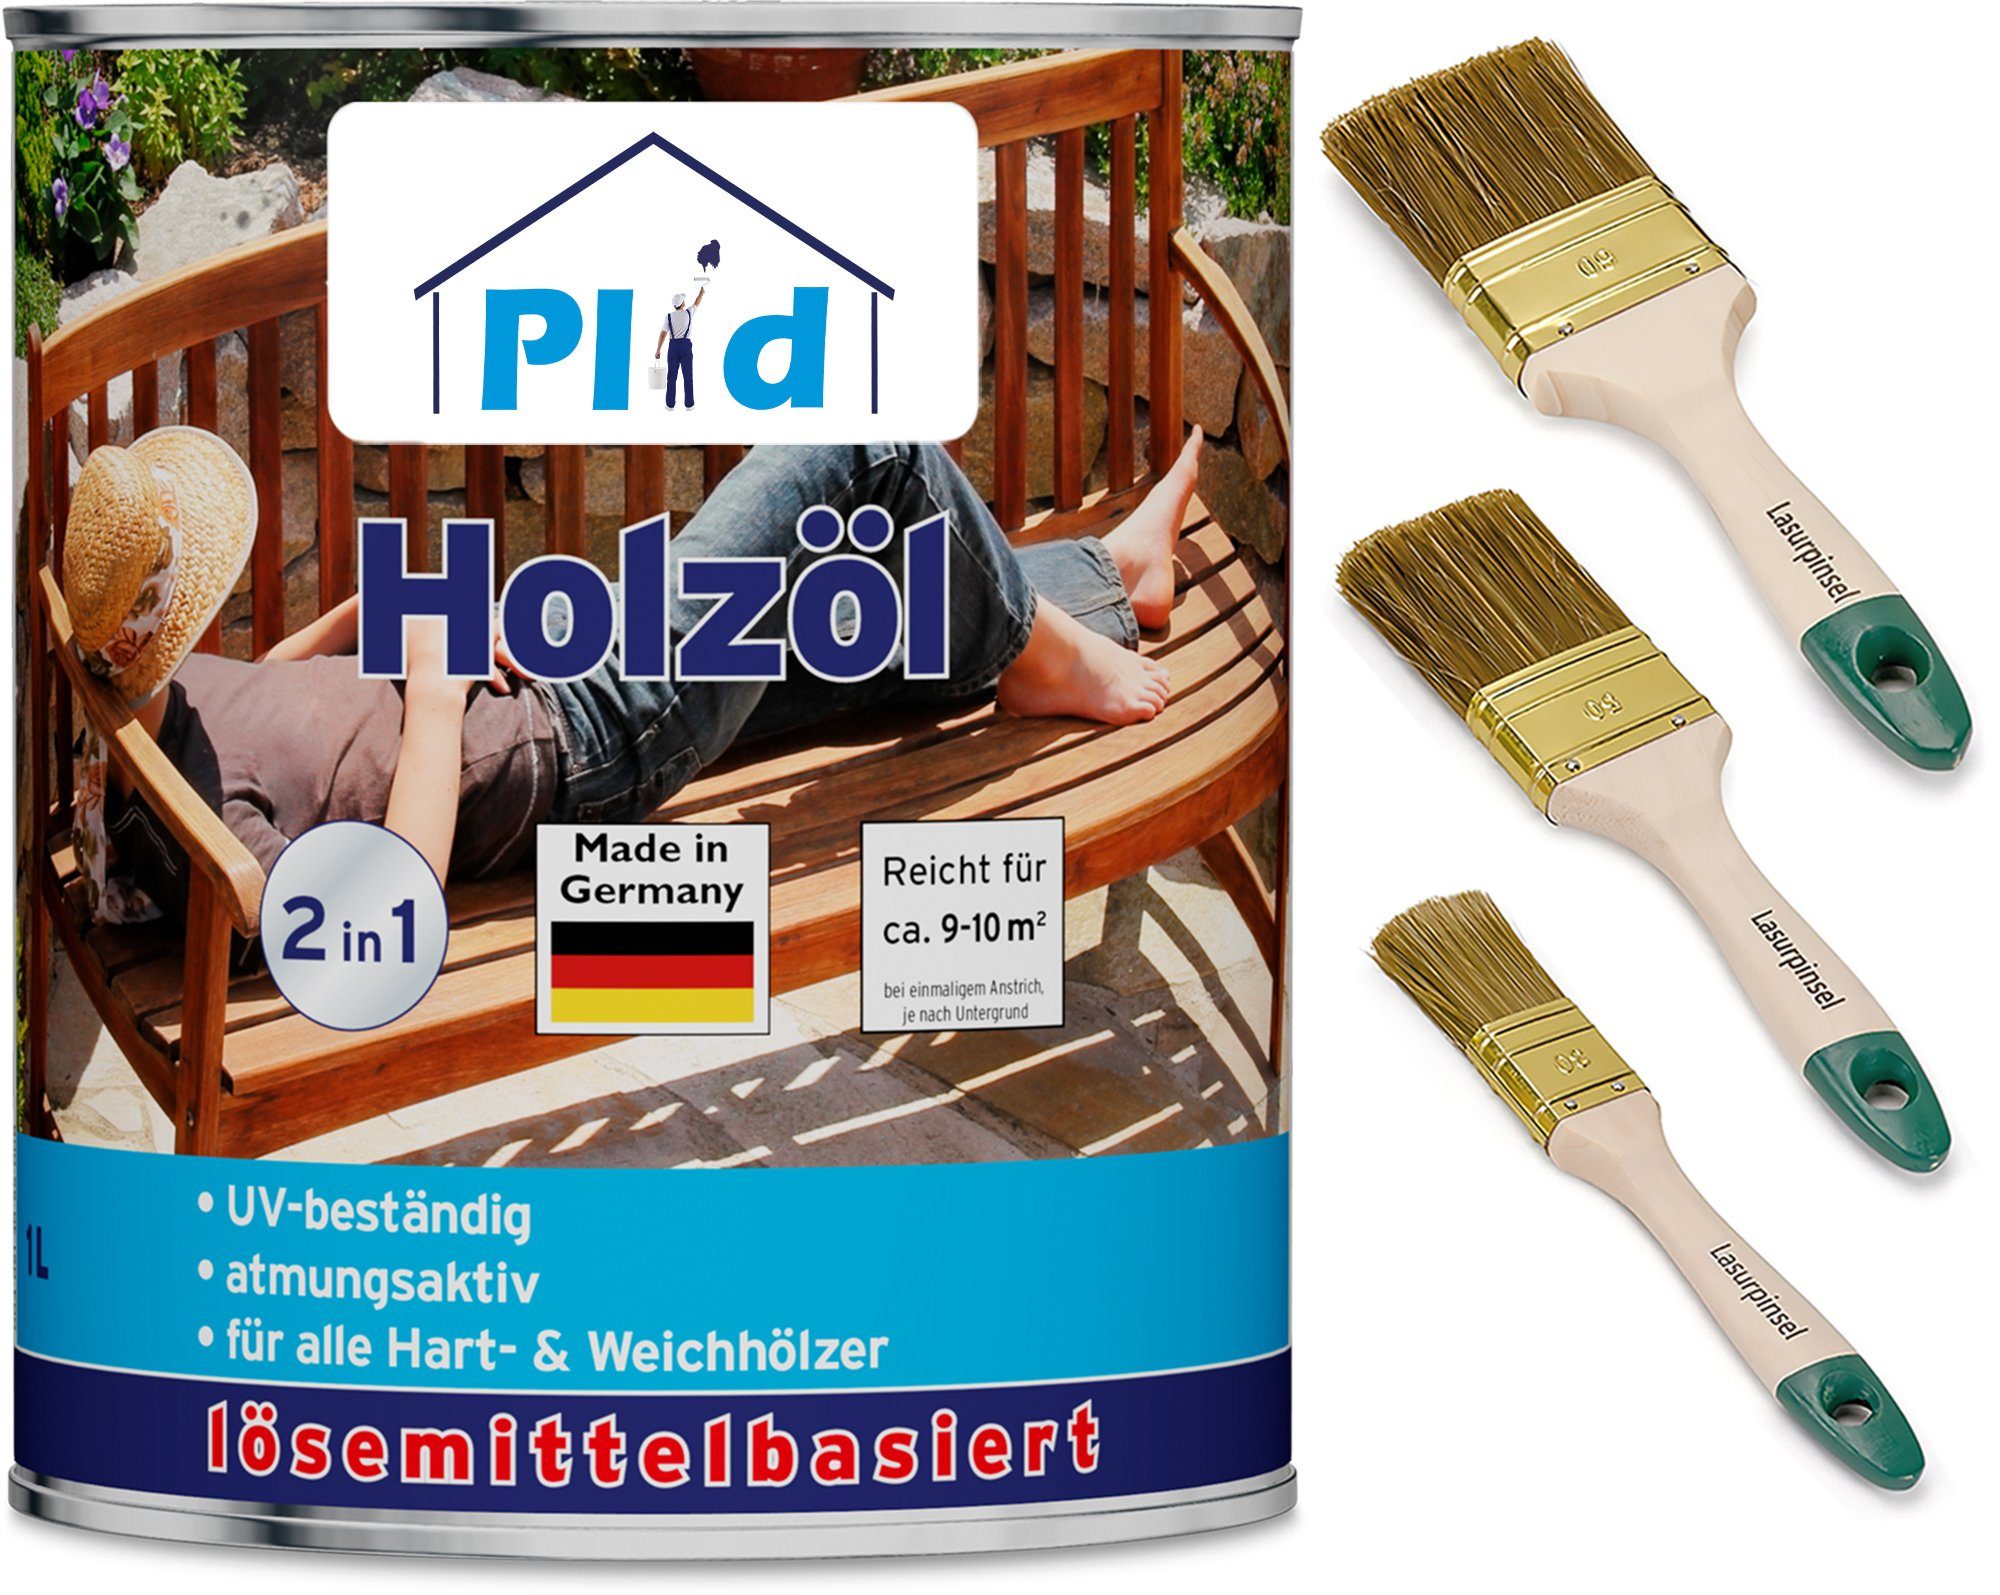 plid Holzöl Pinsel Pflegeöl Farblos Imprägnieröl Holzöl Holzschutz Premium